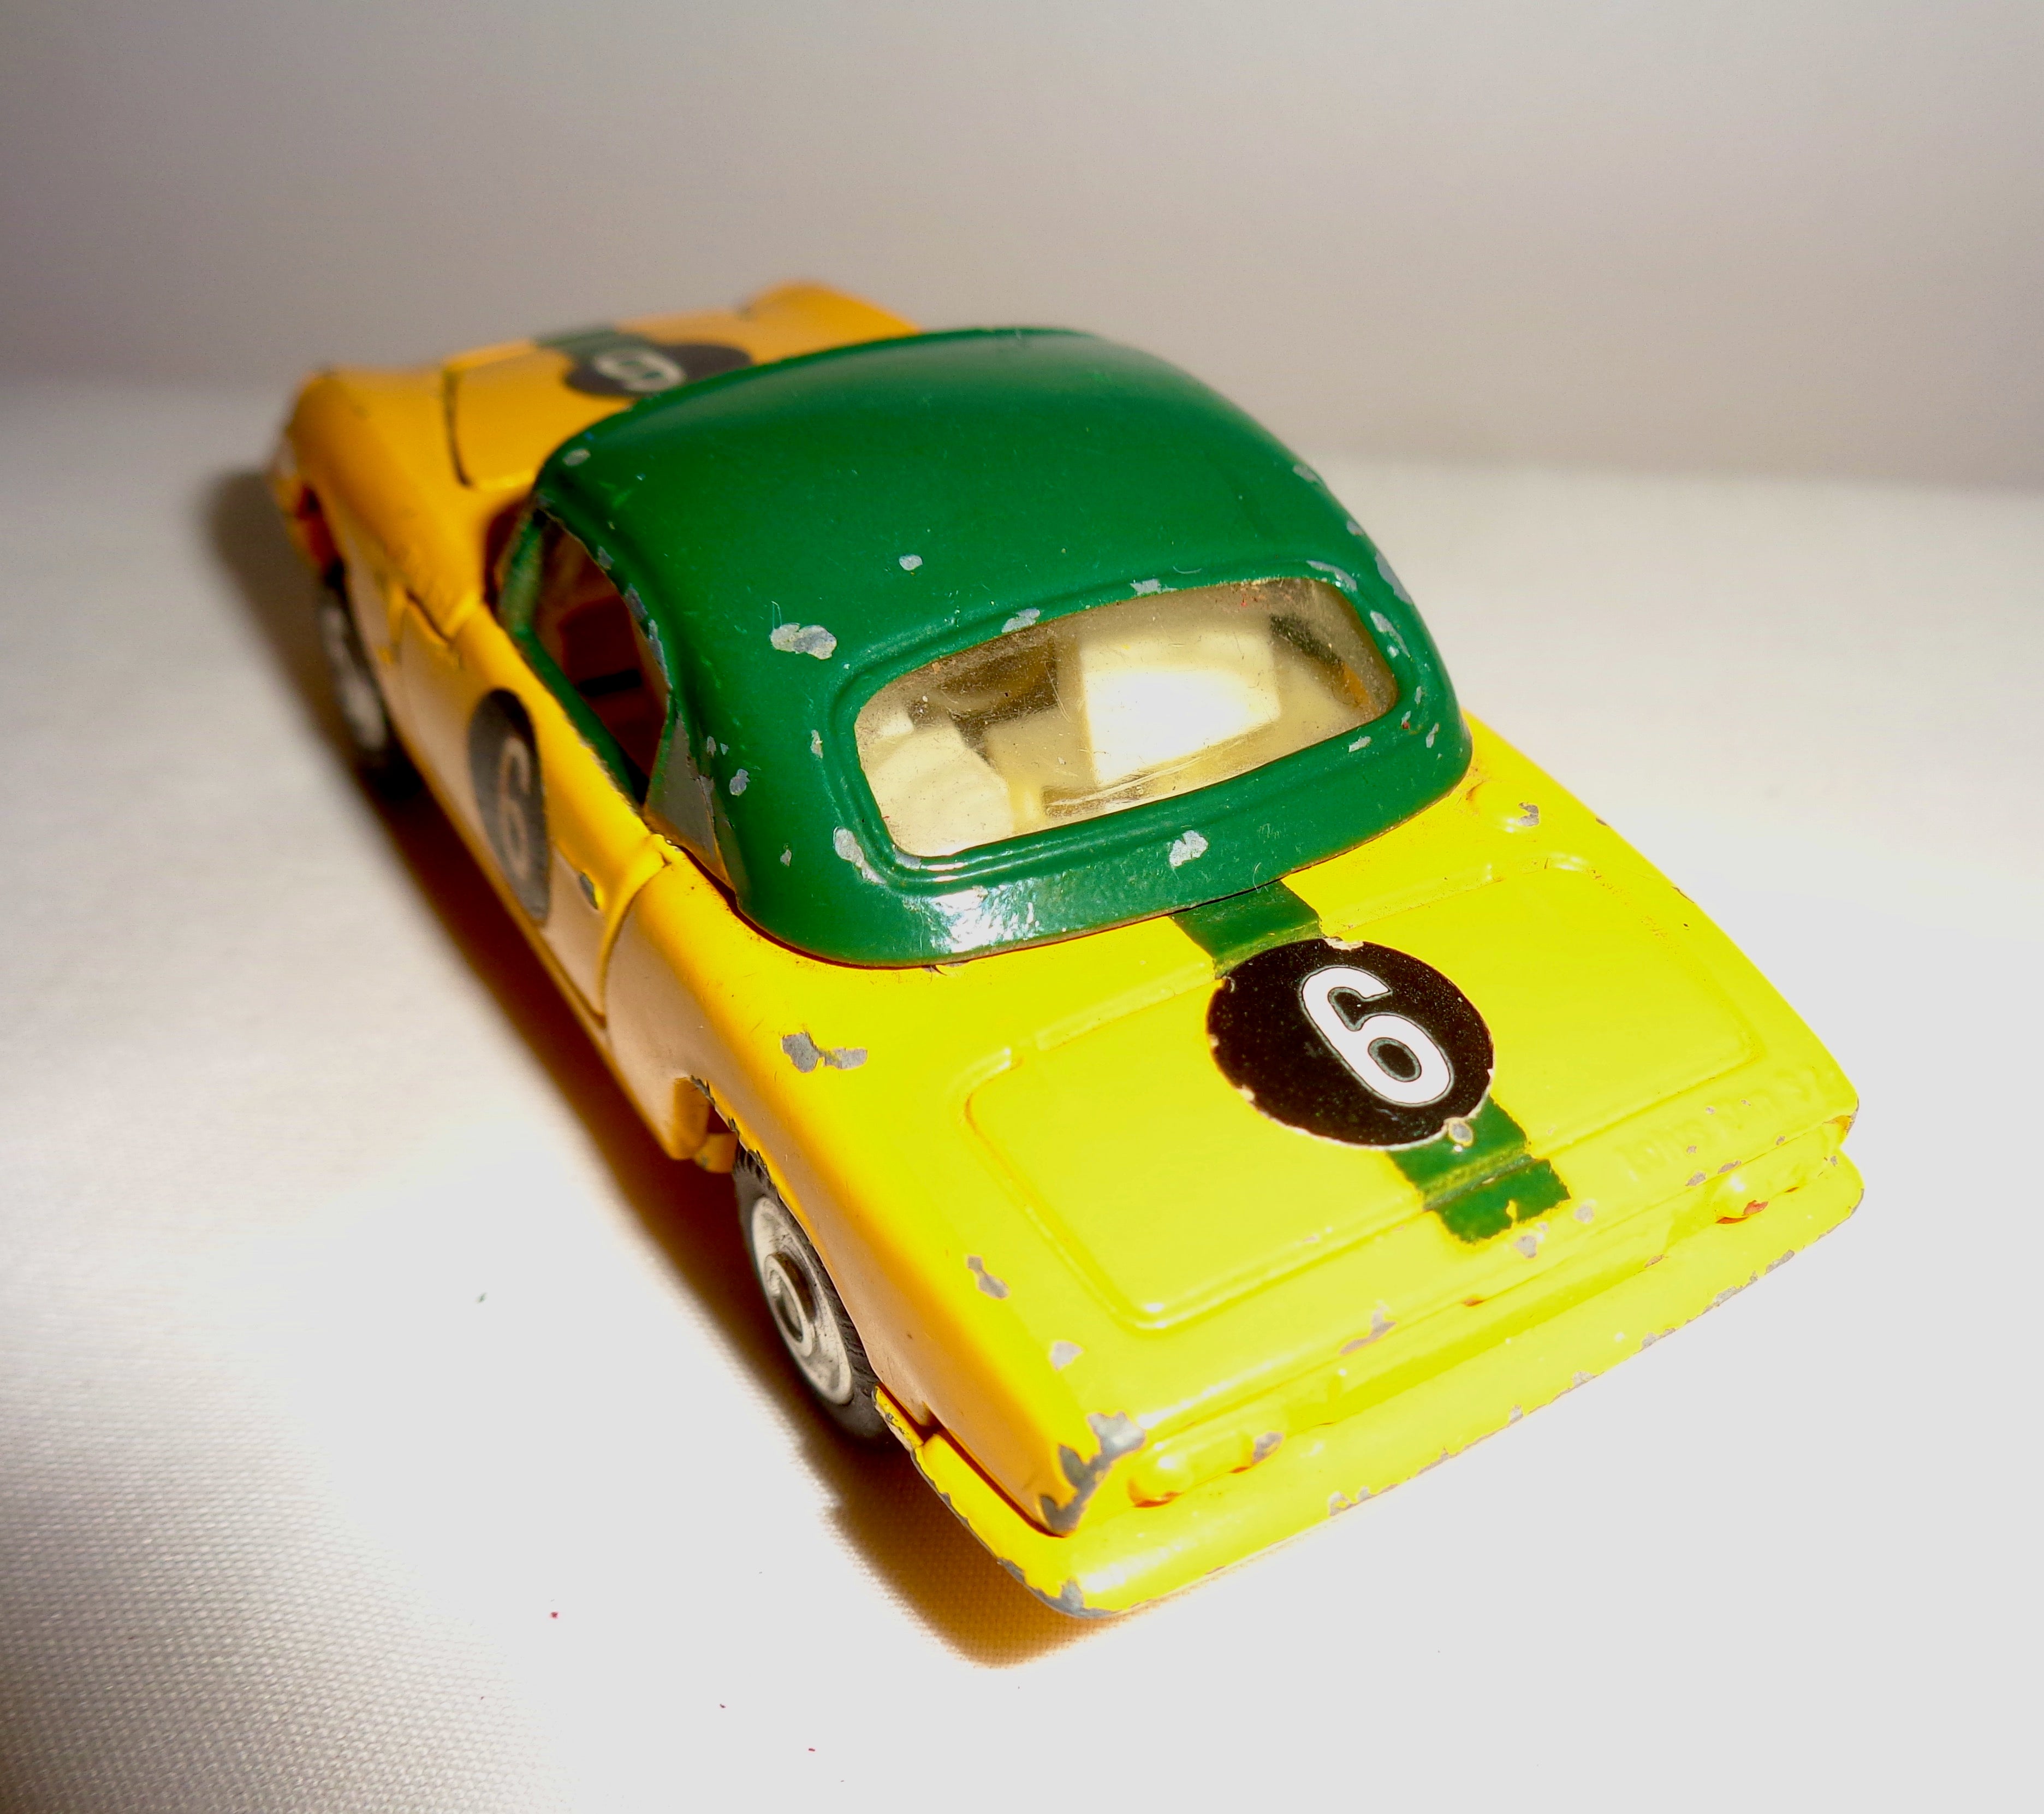 Corgi Toys Model 319 Lotus Elan S2 Hardtop Coupe In Green and